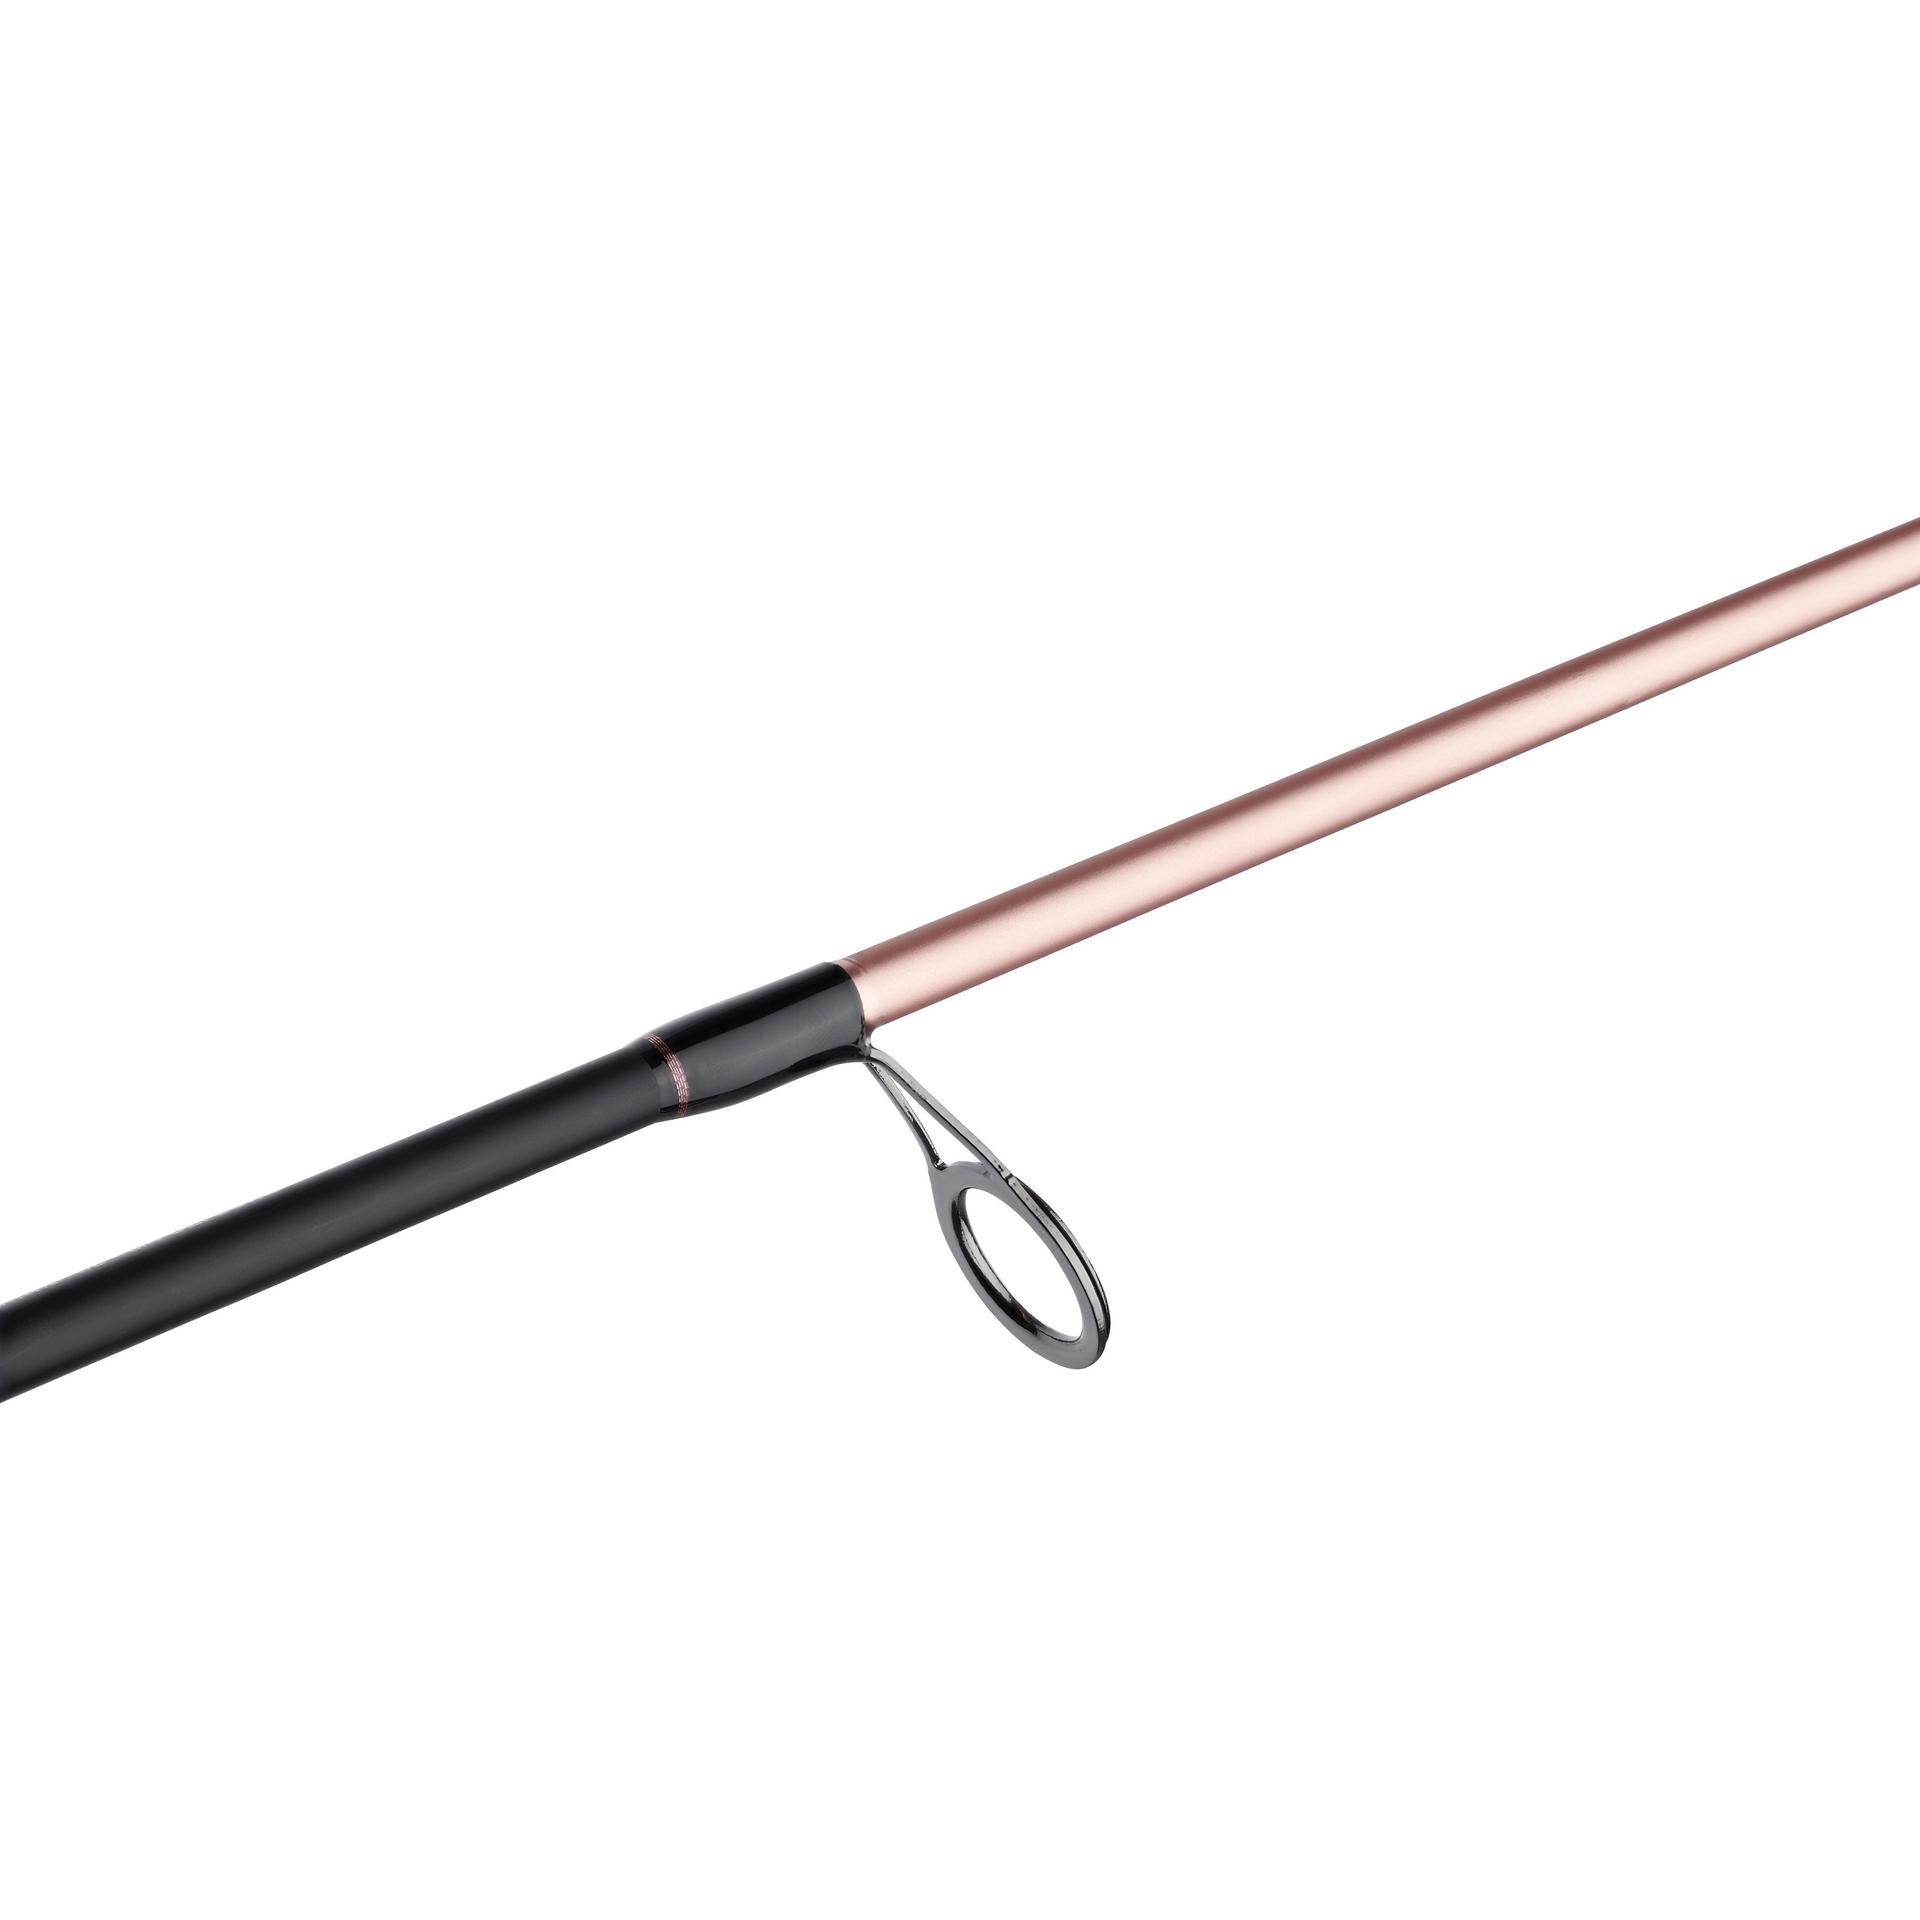 Fishing Tips Rod Guide Rod Repair Kit Stainless Steel Sea Rod Top